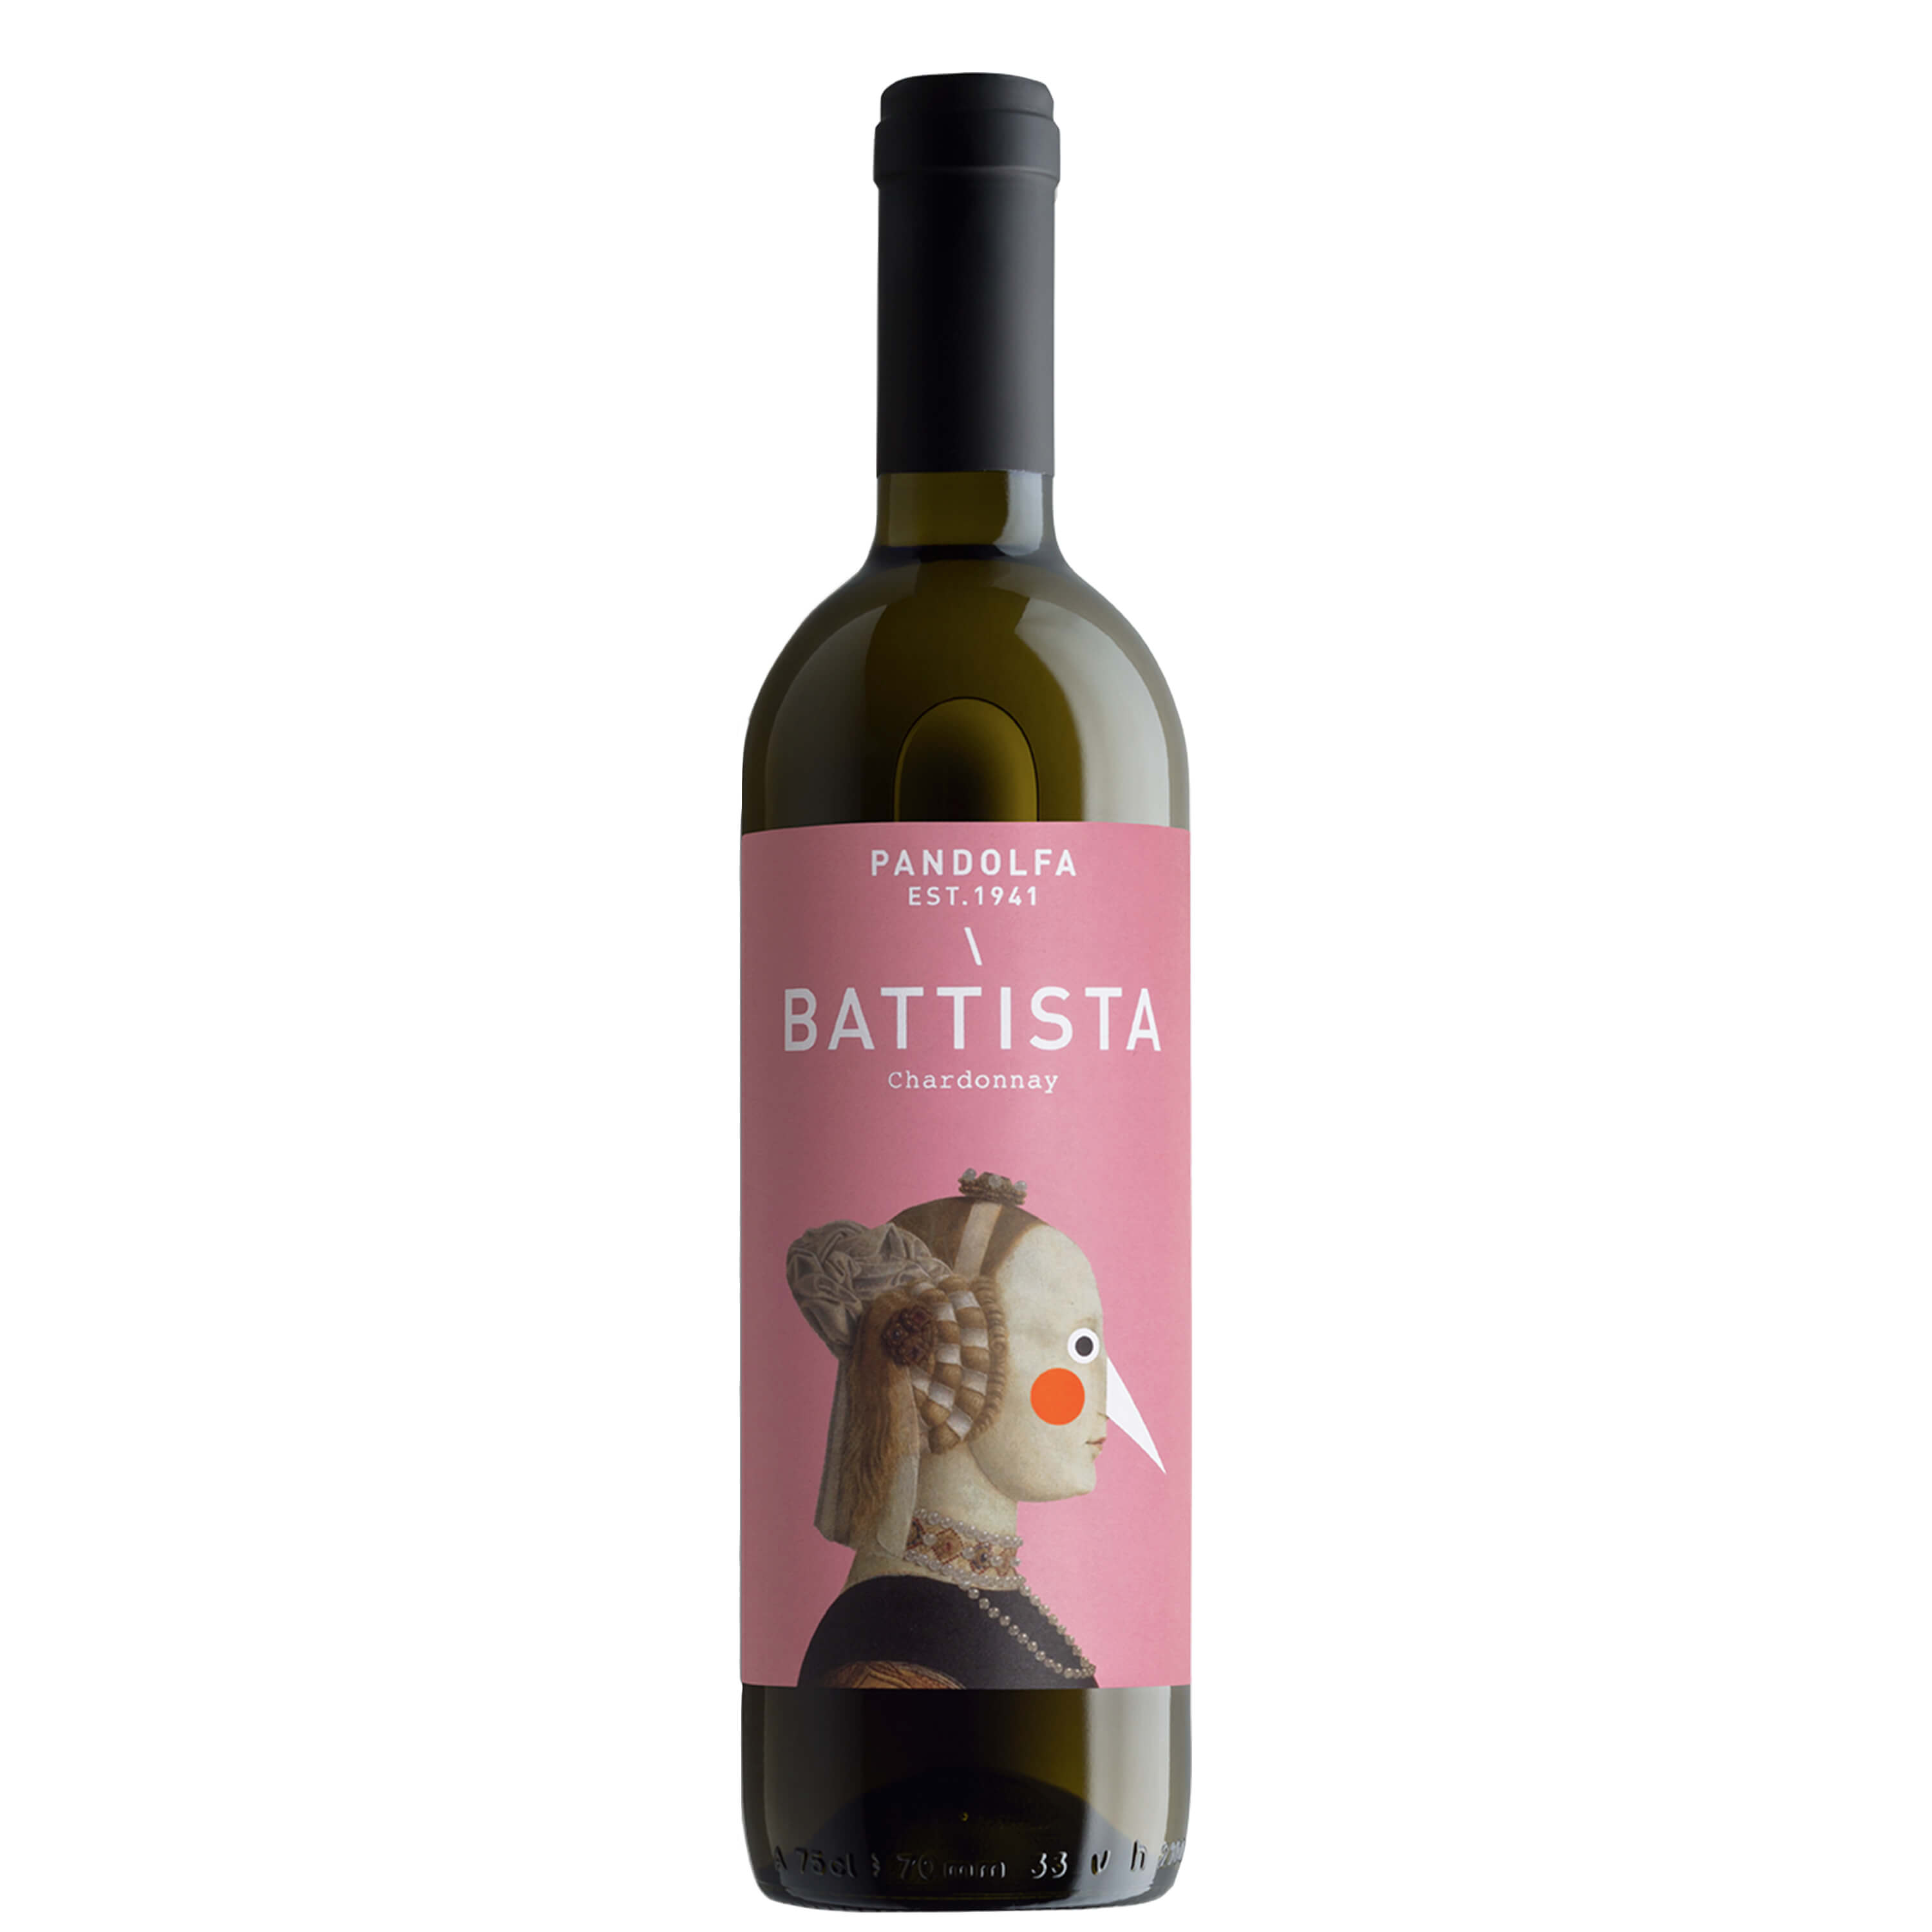 La Pandolfa - Rubicone Chardonnay Igt “battista” 2019